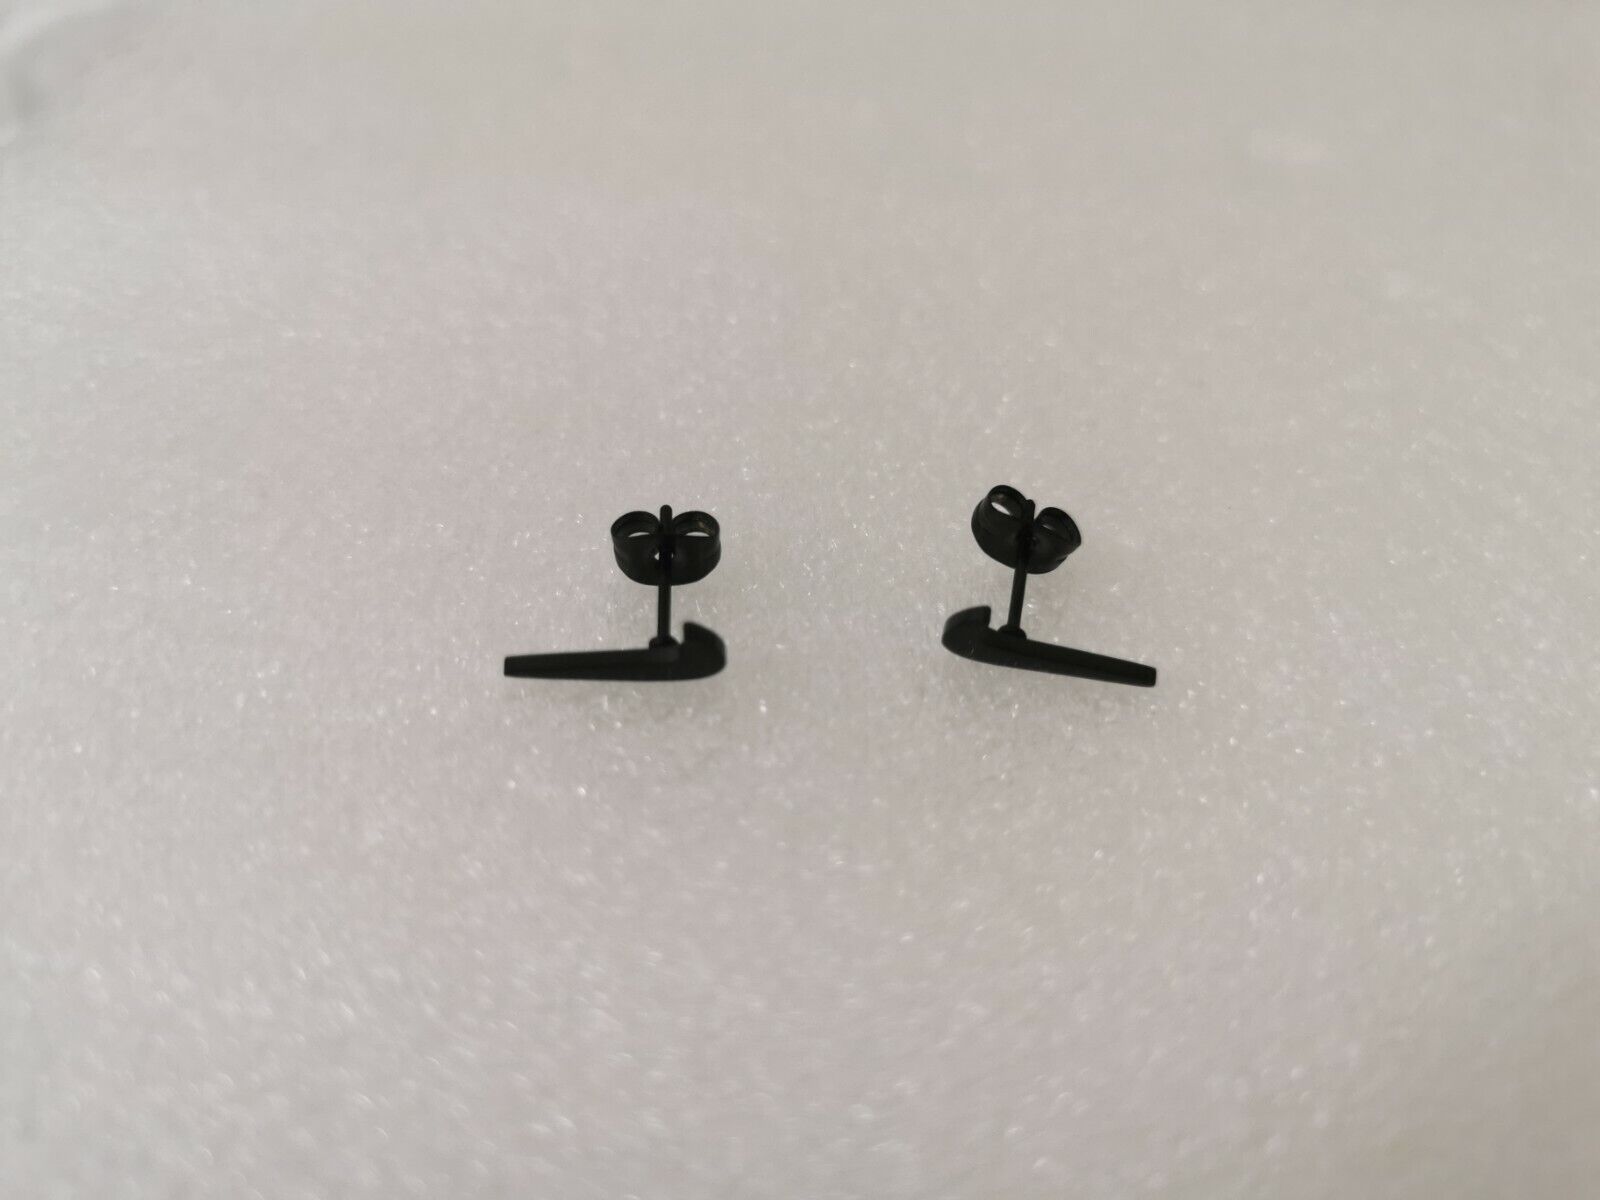 Nike Swoosh Earrings Stud Earrings Black Check Tick 1 Pair For Pierced Ears